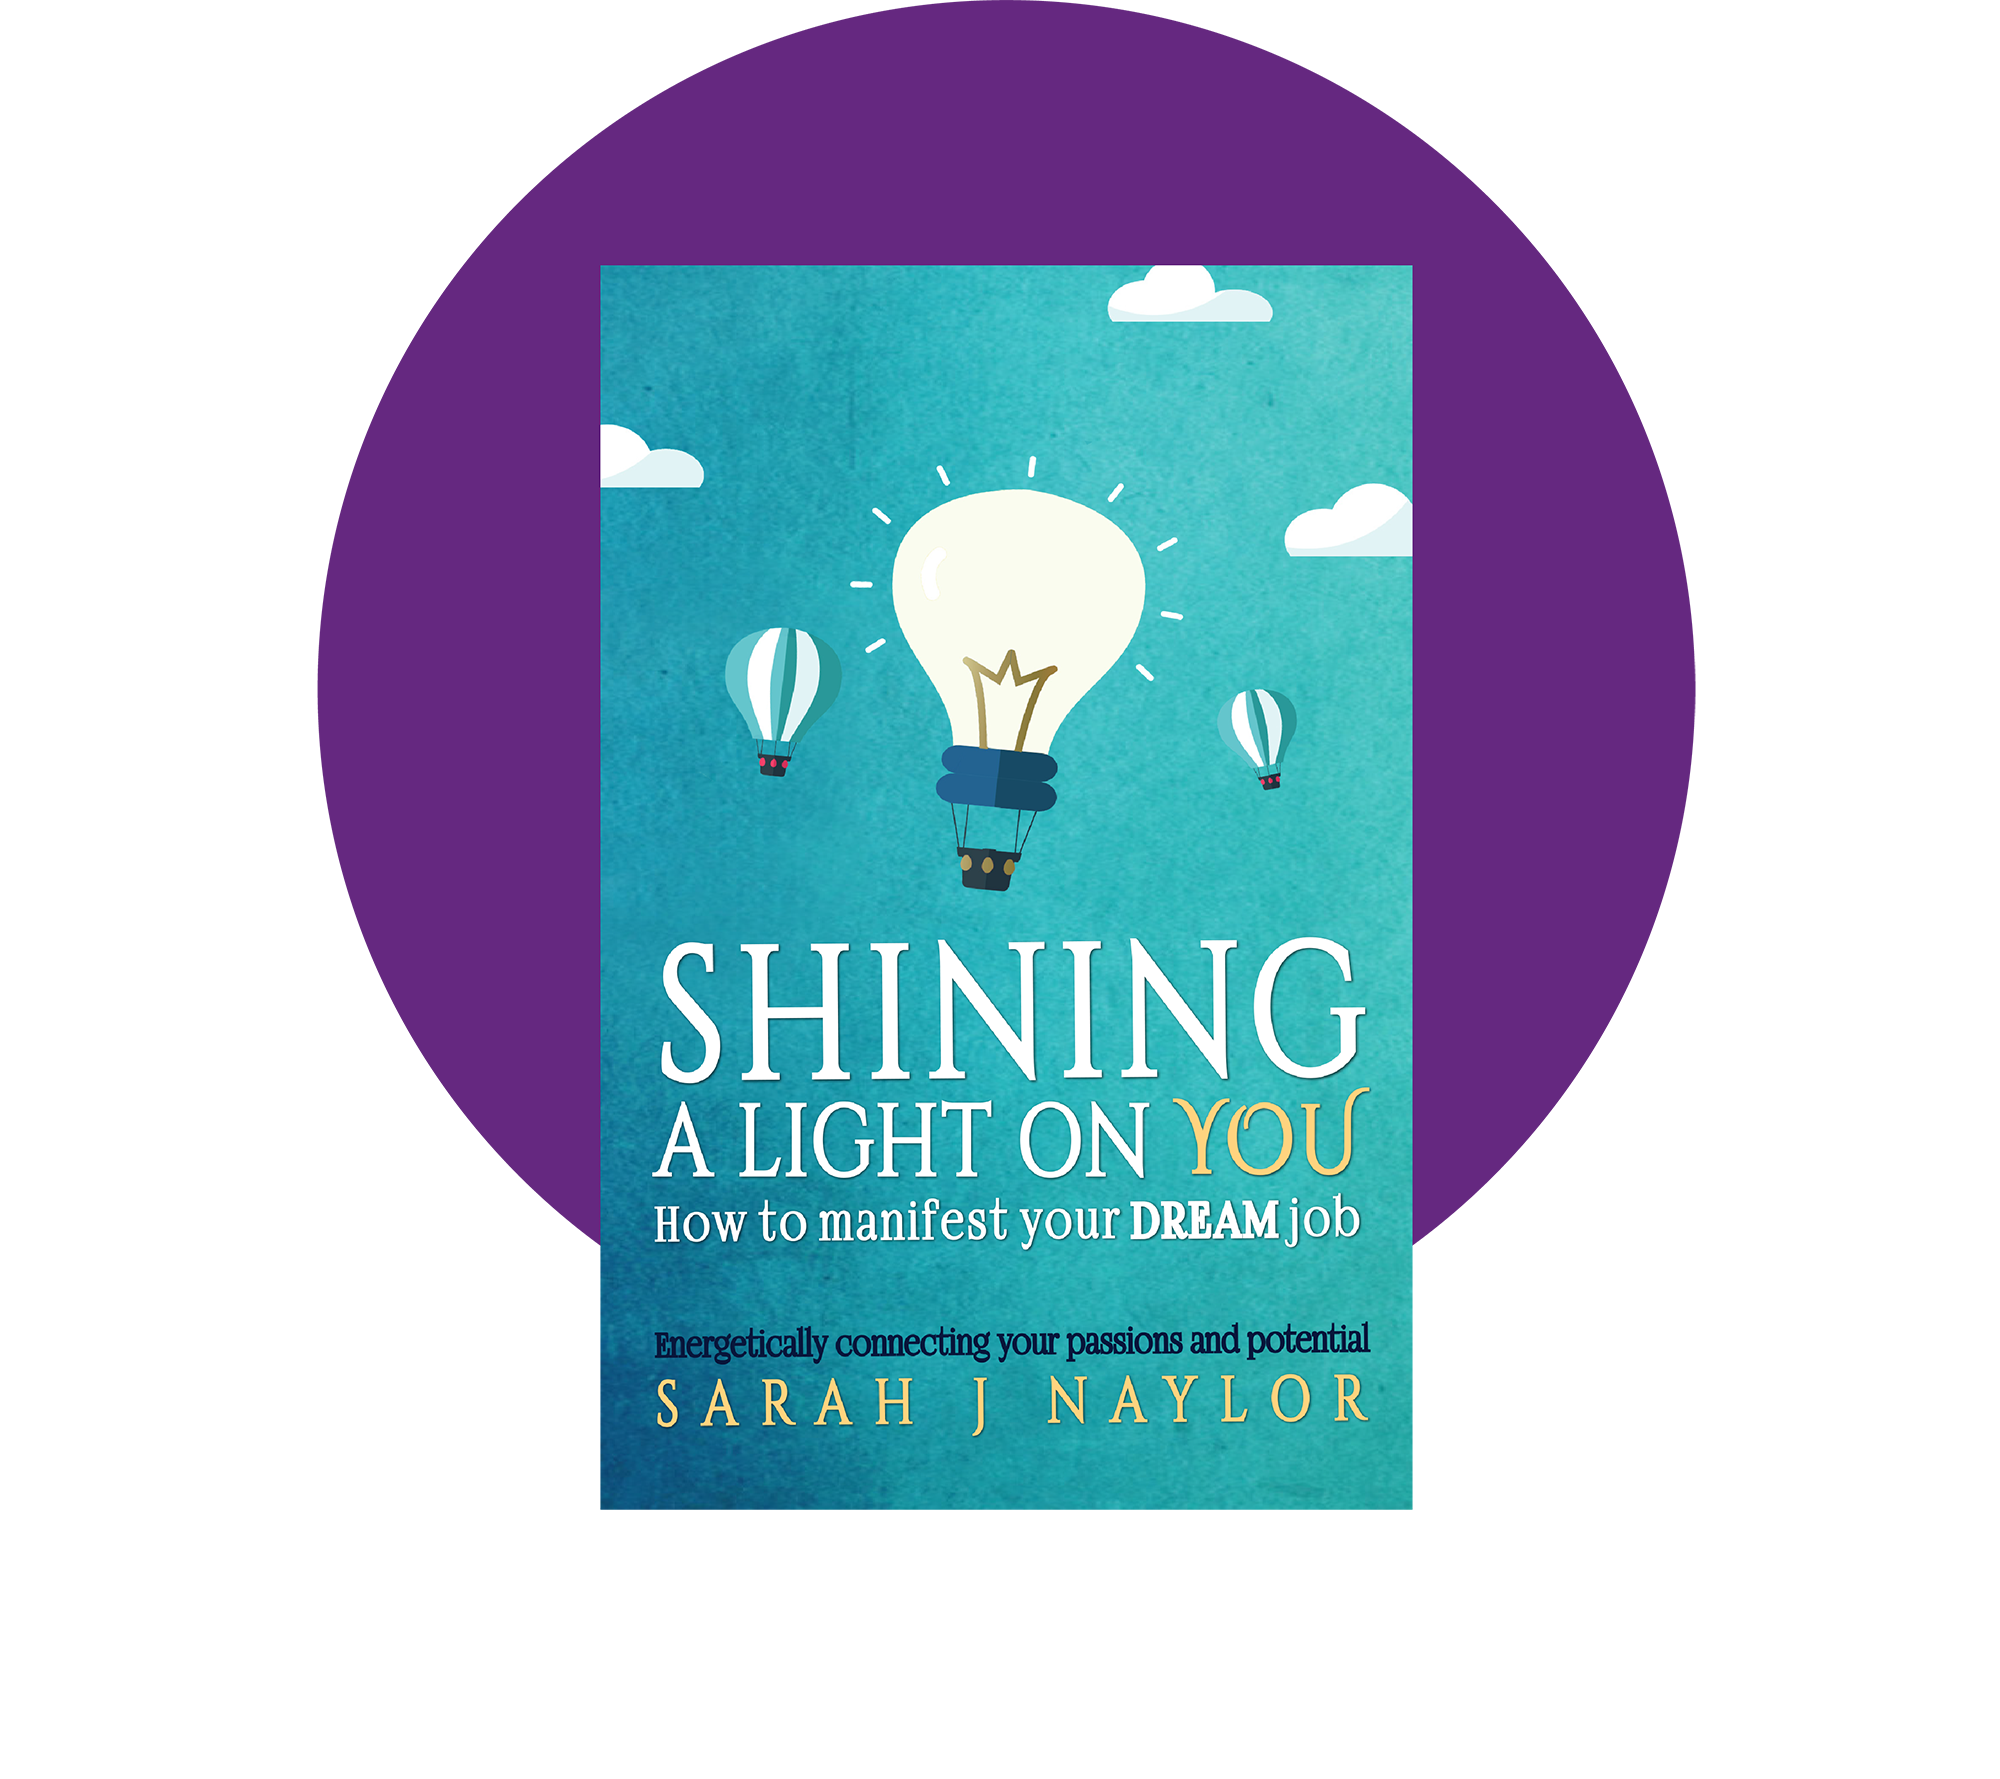 Shining a Light on you career coaching book by Sarah J Naylor